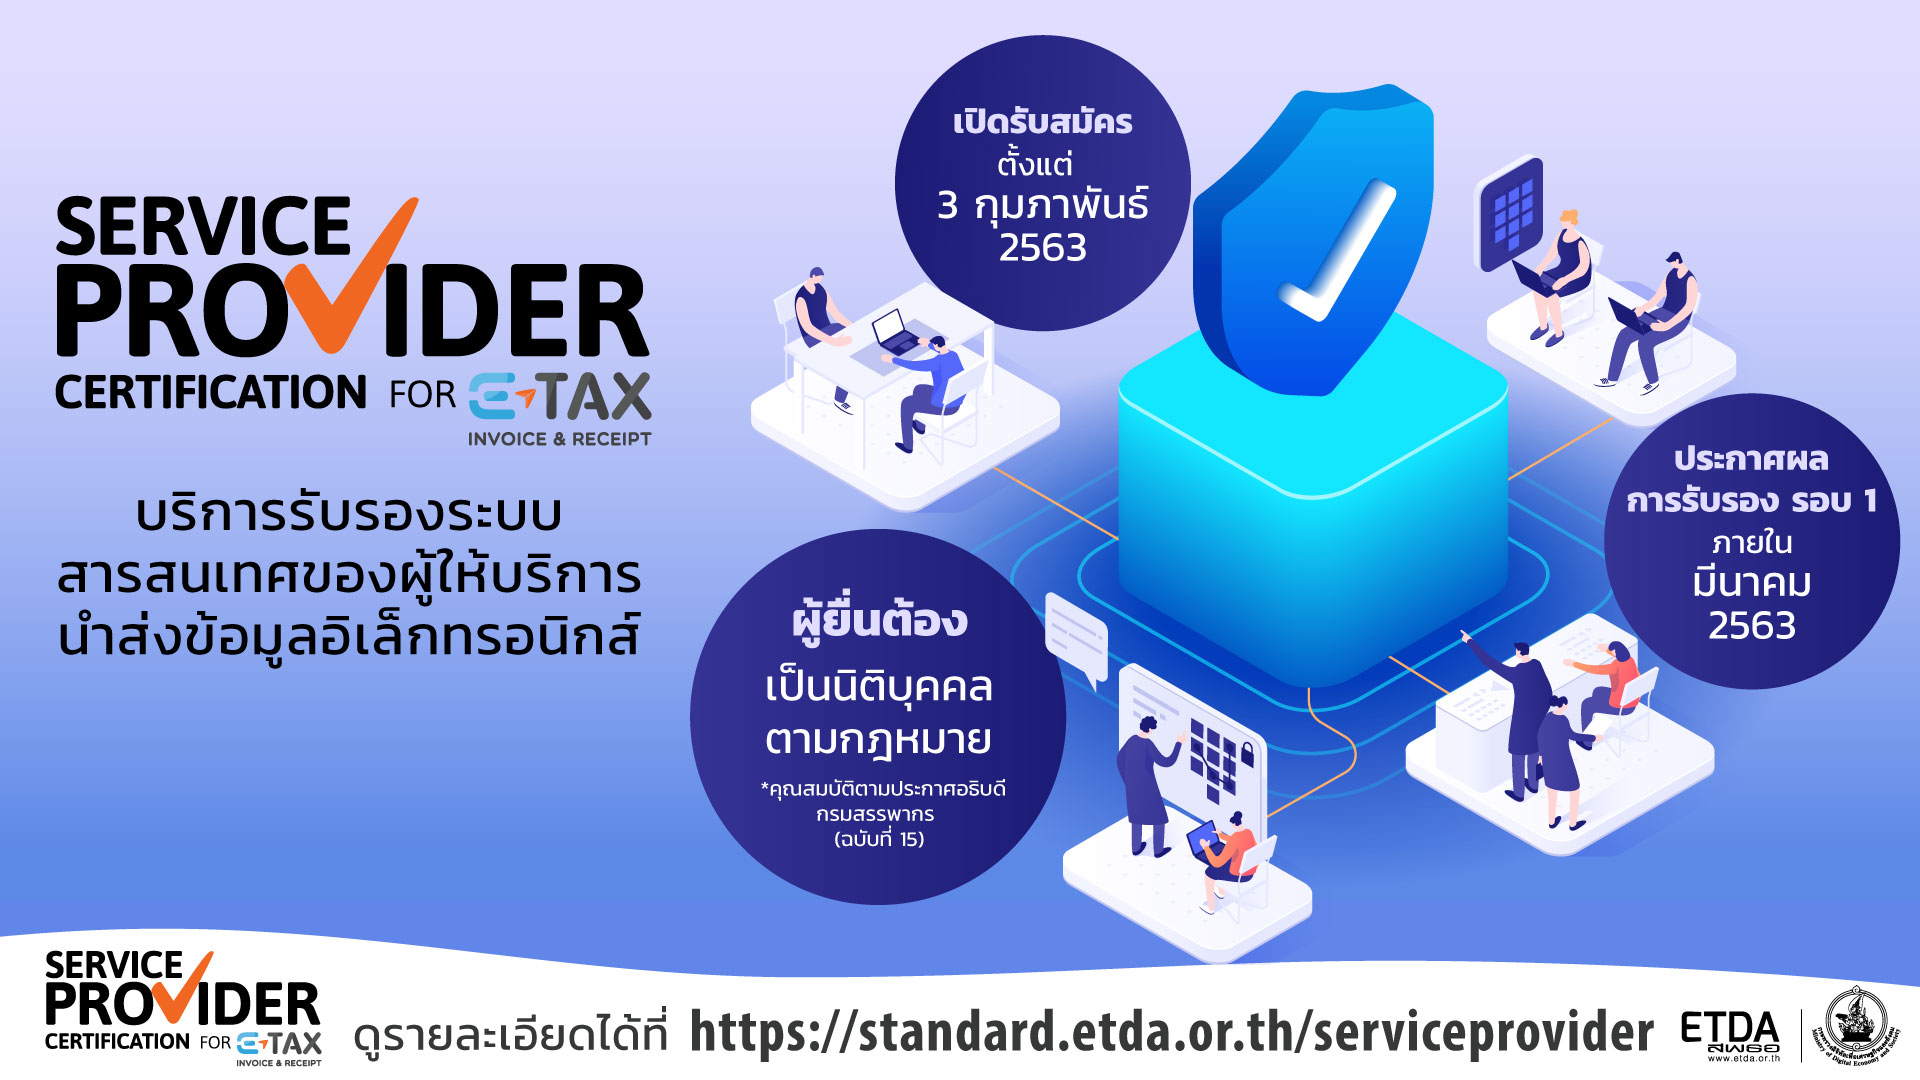 ETDA ดีเดย์รับลงทะเบียน 3 ก.พ.นี้ ในการรับรองระบบสารสนเทศผู้ให้บริการนำส่งข้อมูล e-Tax Invoice และ e-Receipt ให้กรมสรรพากร